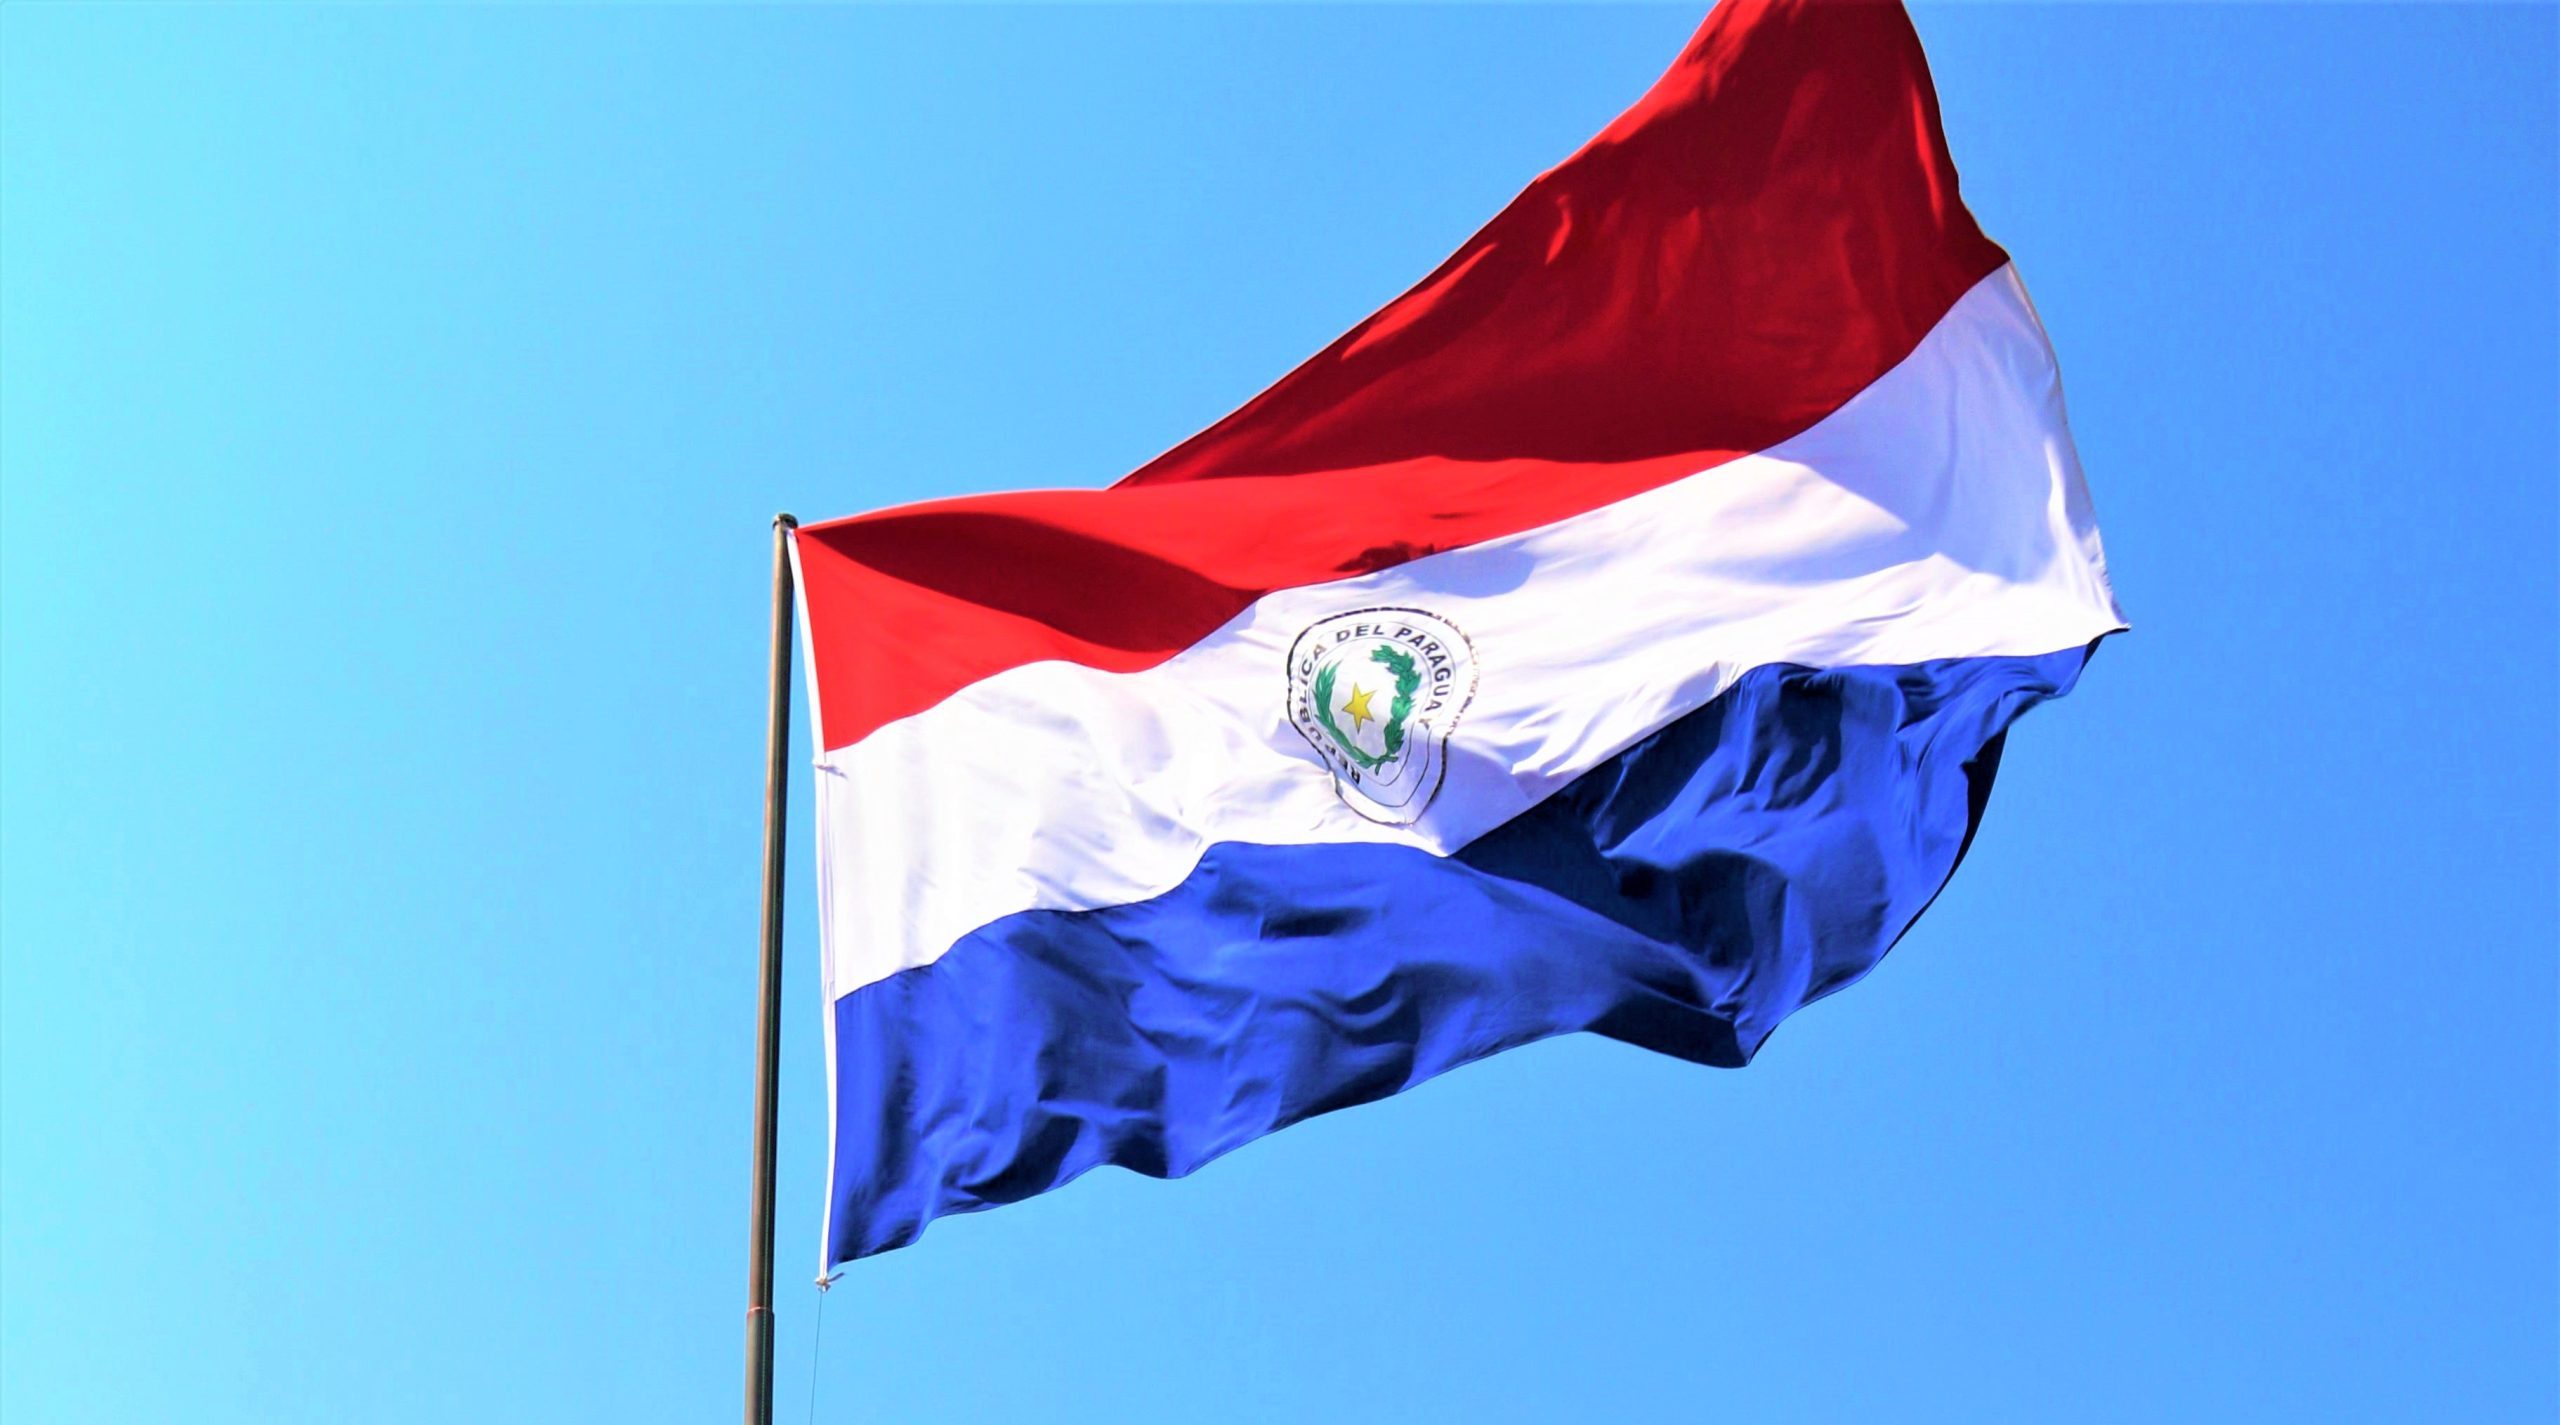 https://commons.wikimedia.org/wiki/File:Bandera_paraguaya.jpg